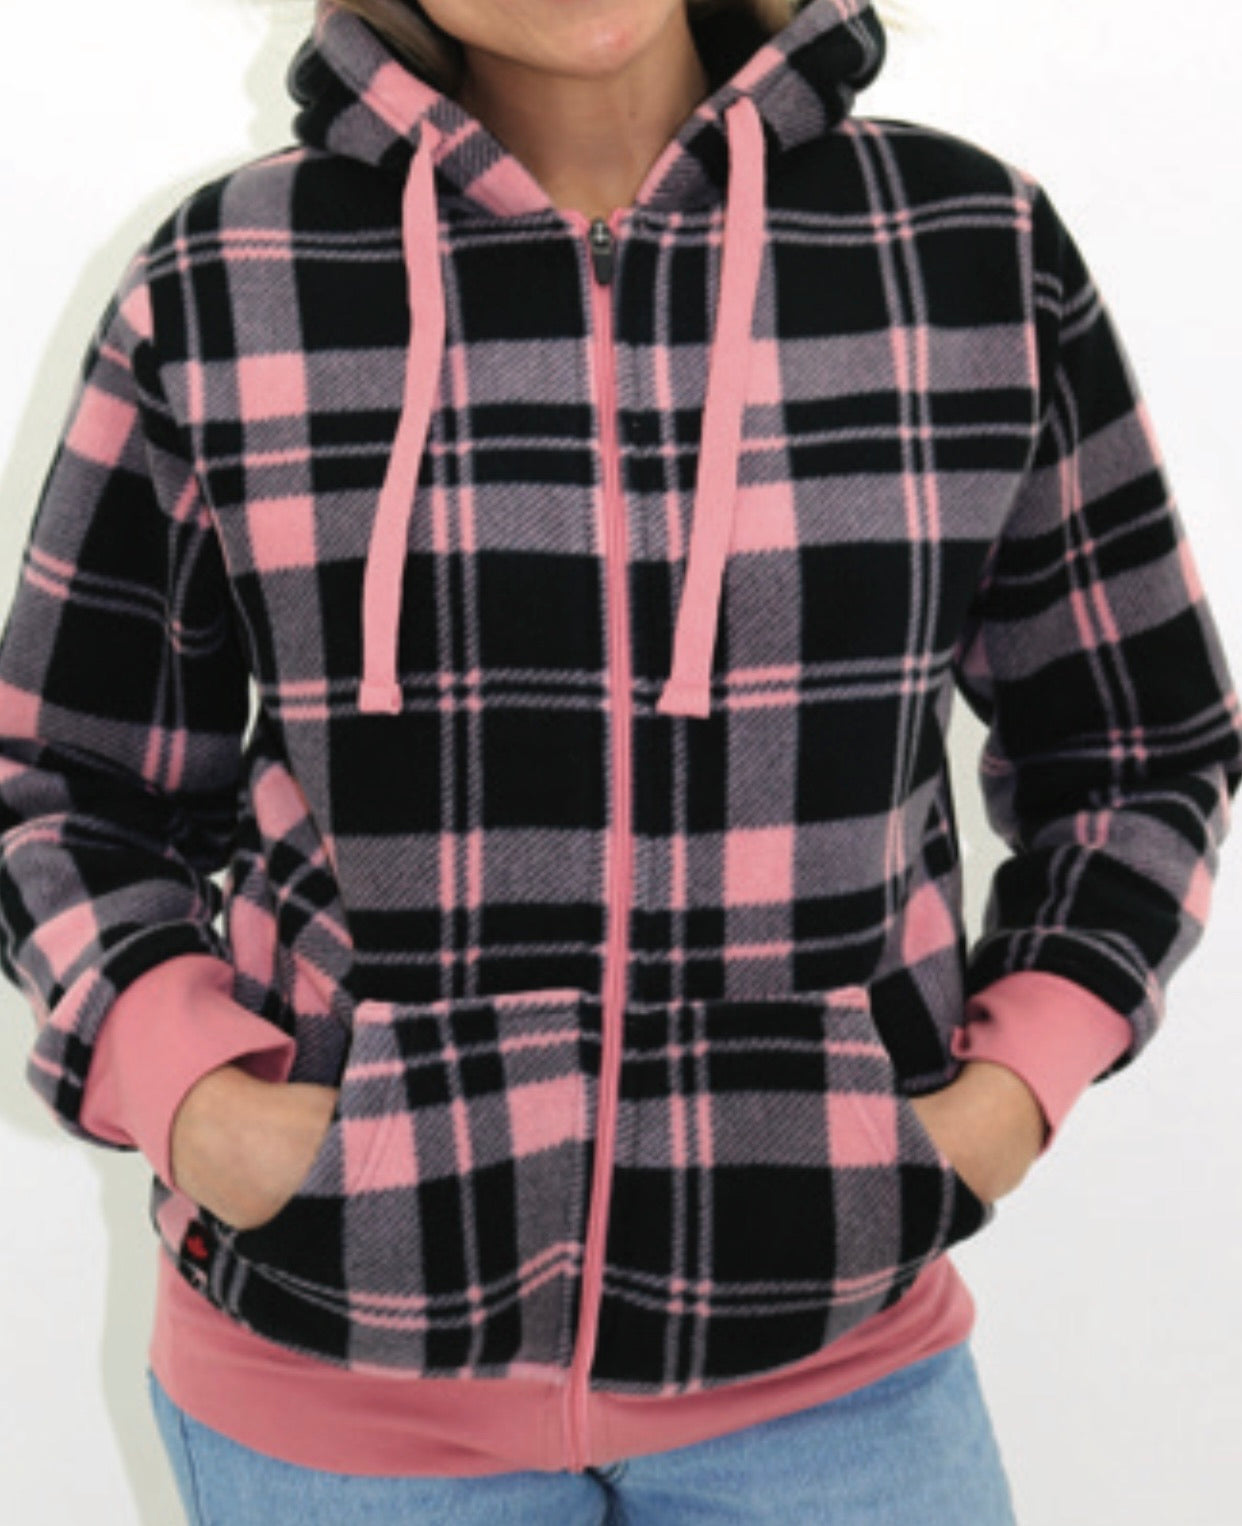 Lago pink checkered jacket/hoodie